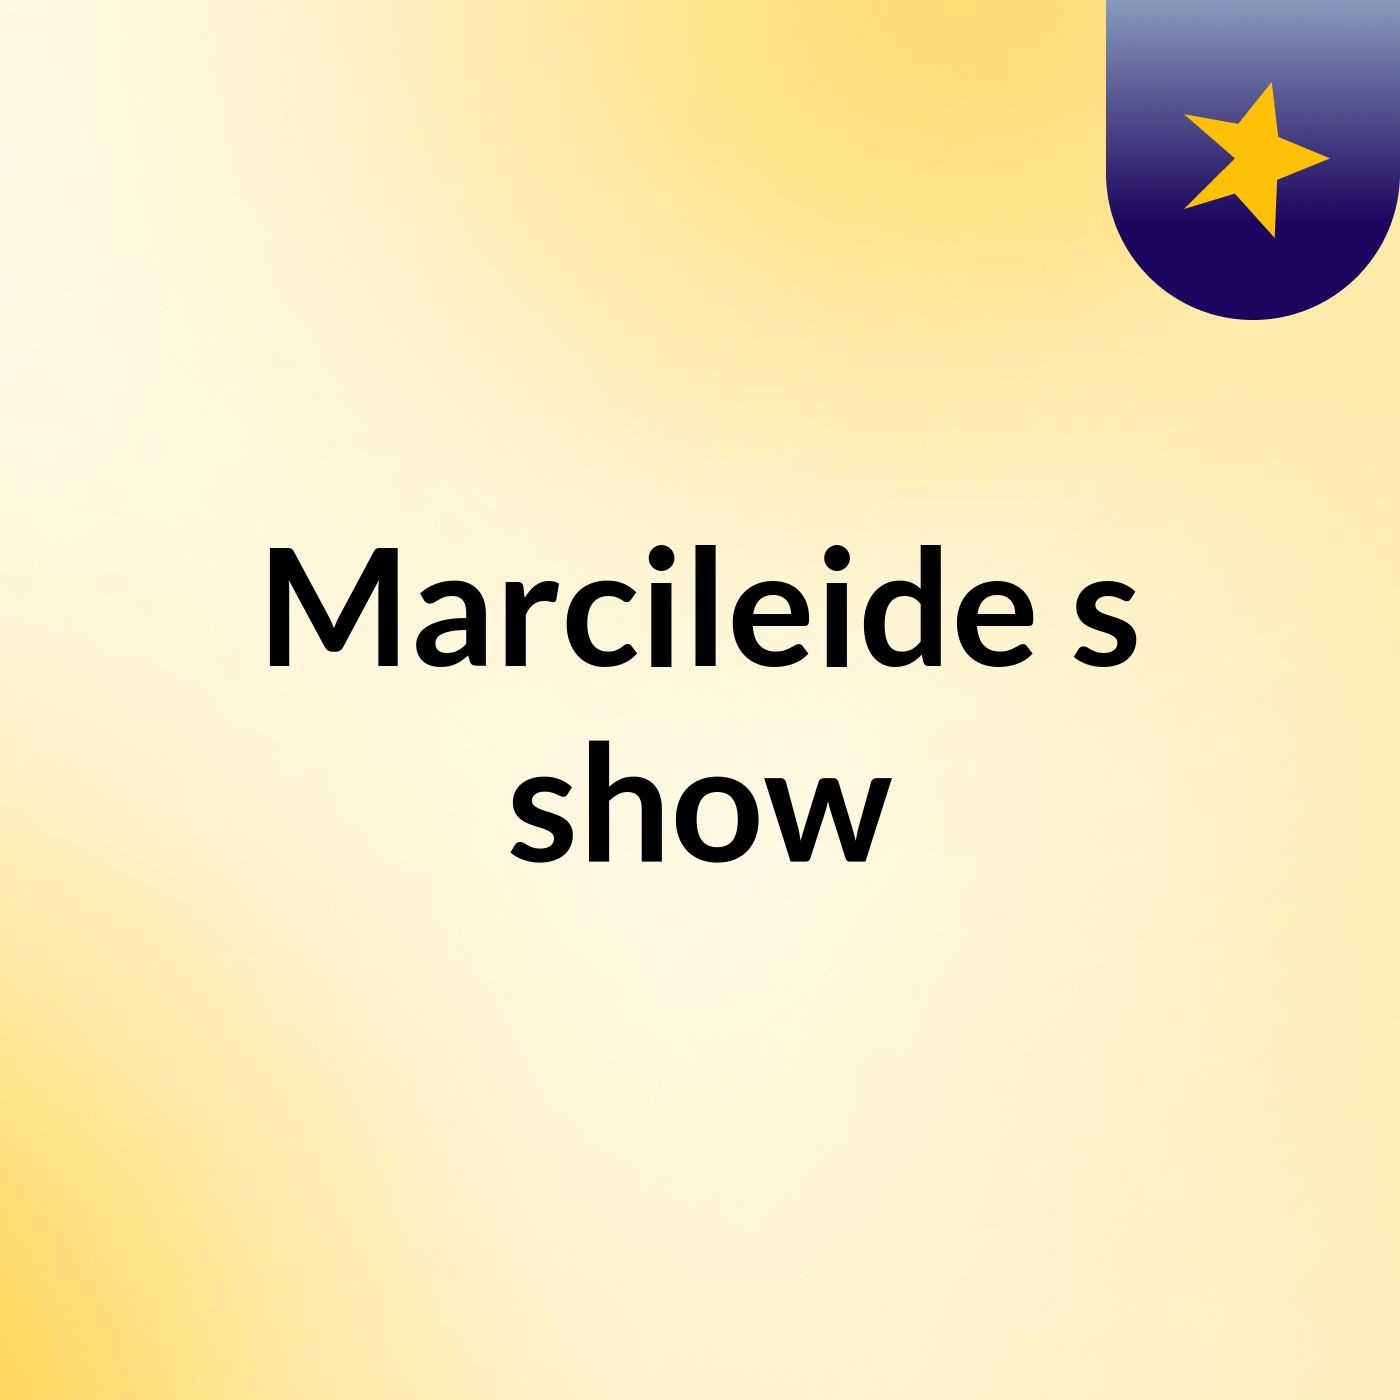 Marcileide's show